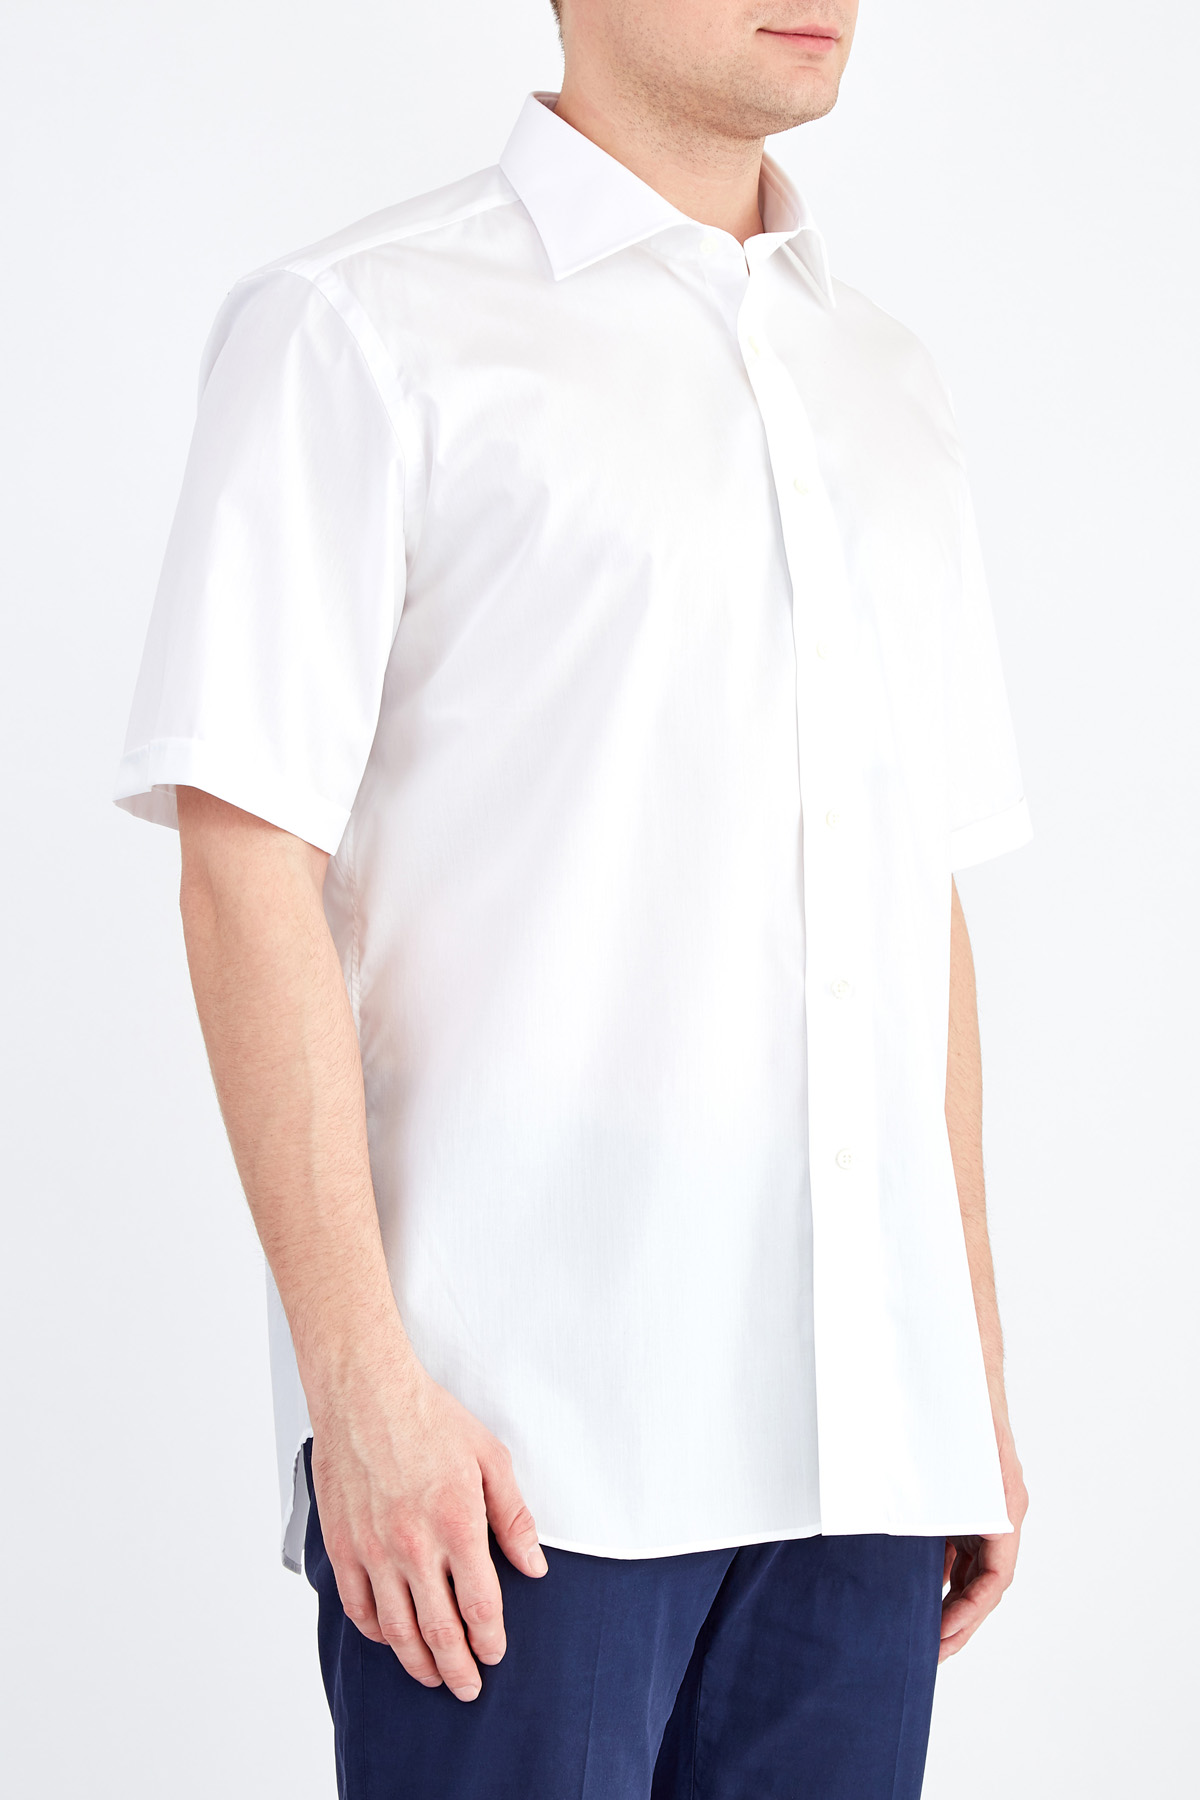 Базовая белая рубашка с коротким рукавом из поплина Impeccabile CANALI, цвет белый, размер 58;60 - фото 3